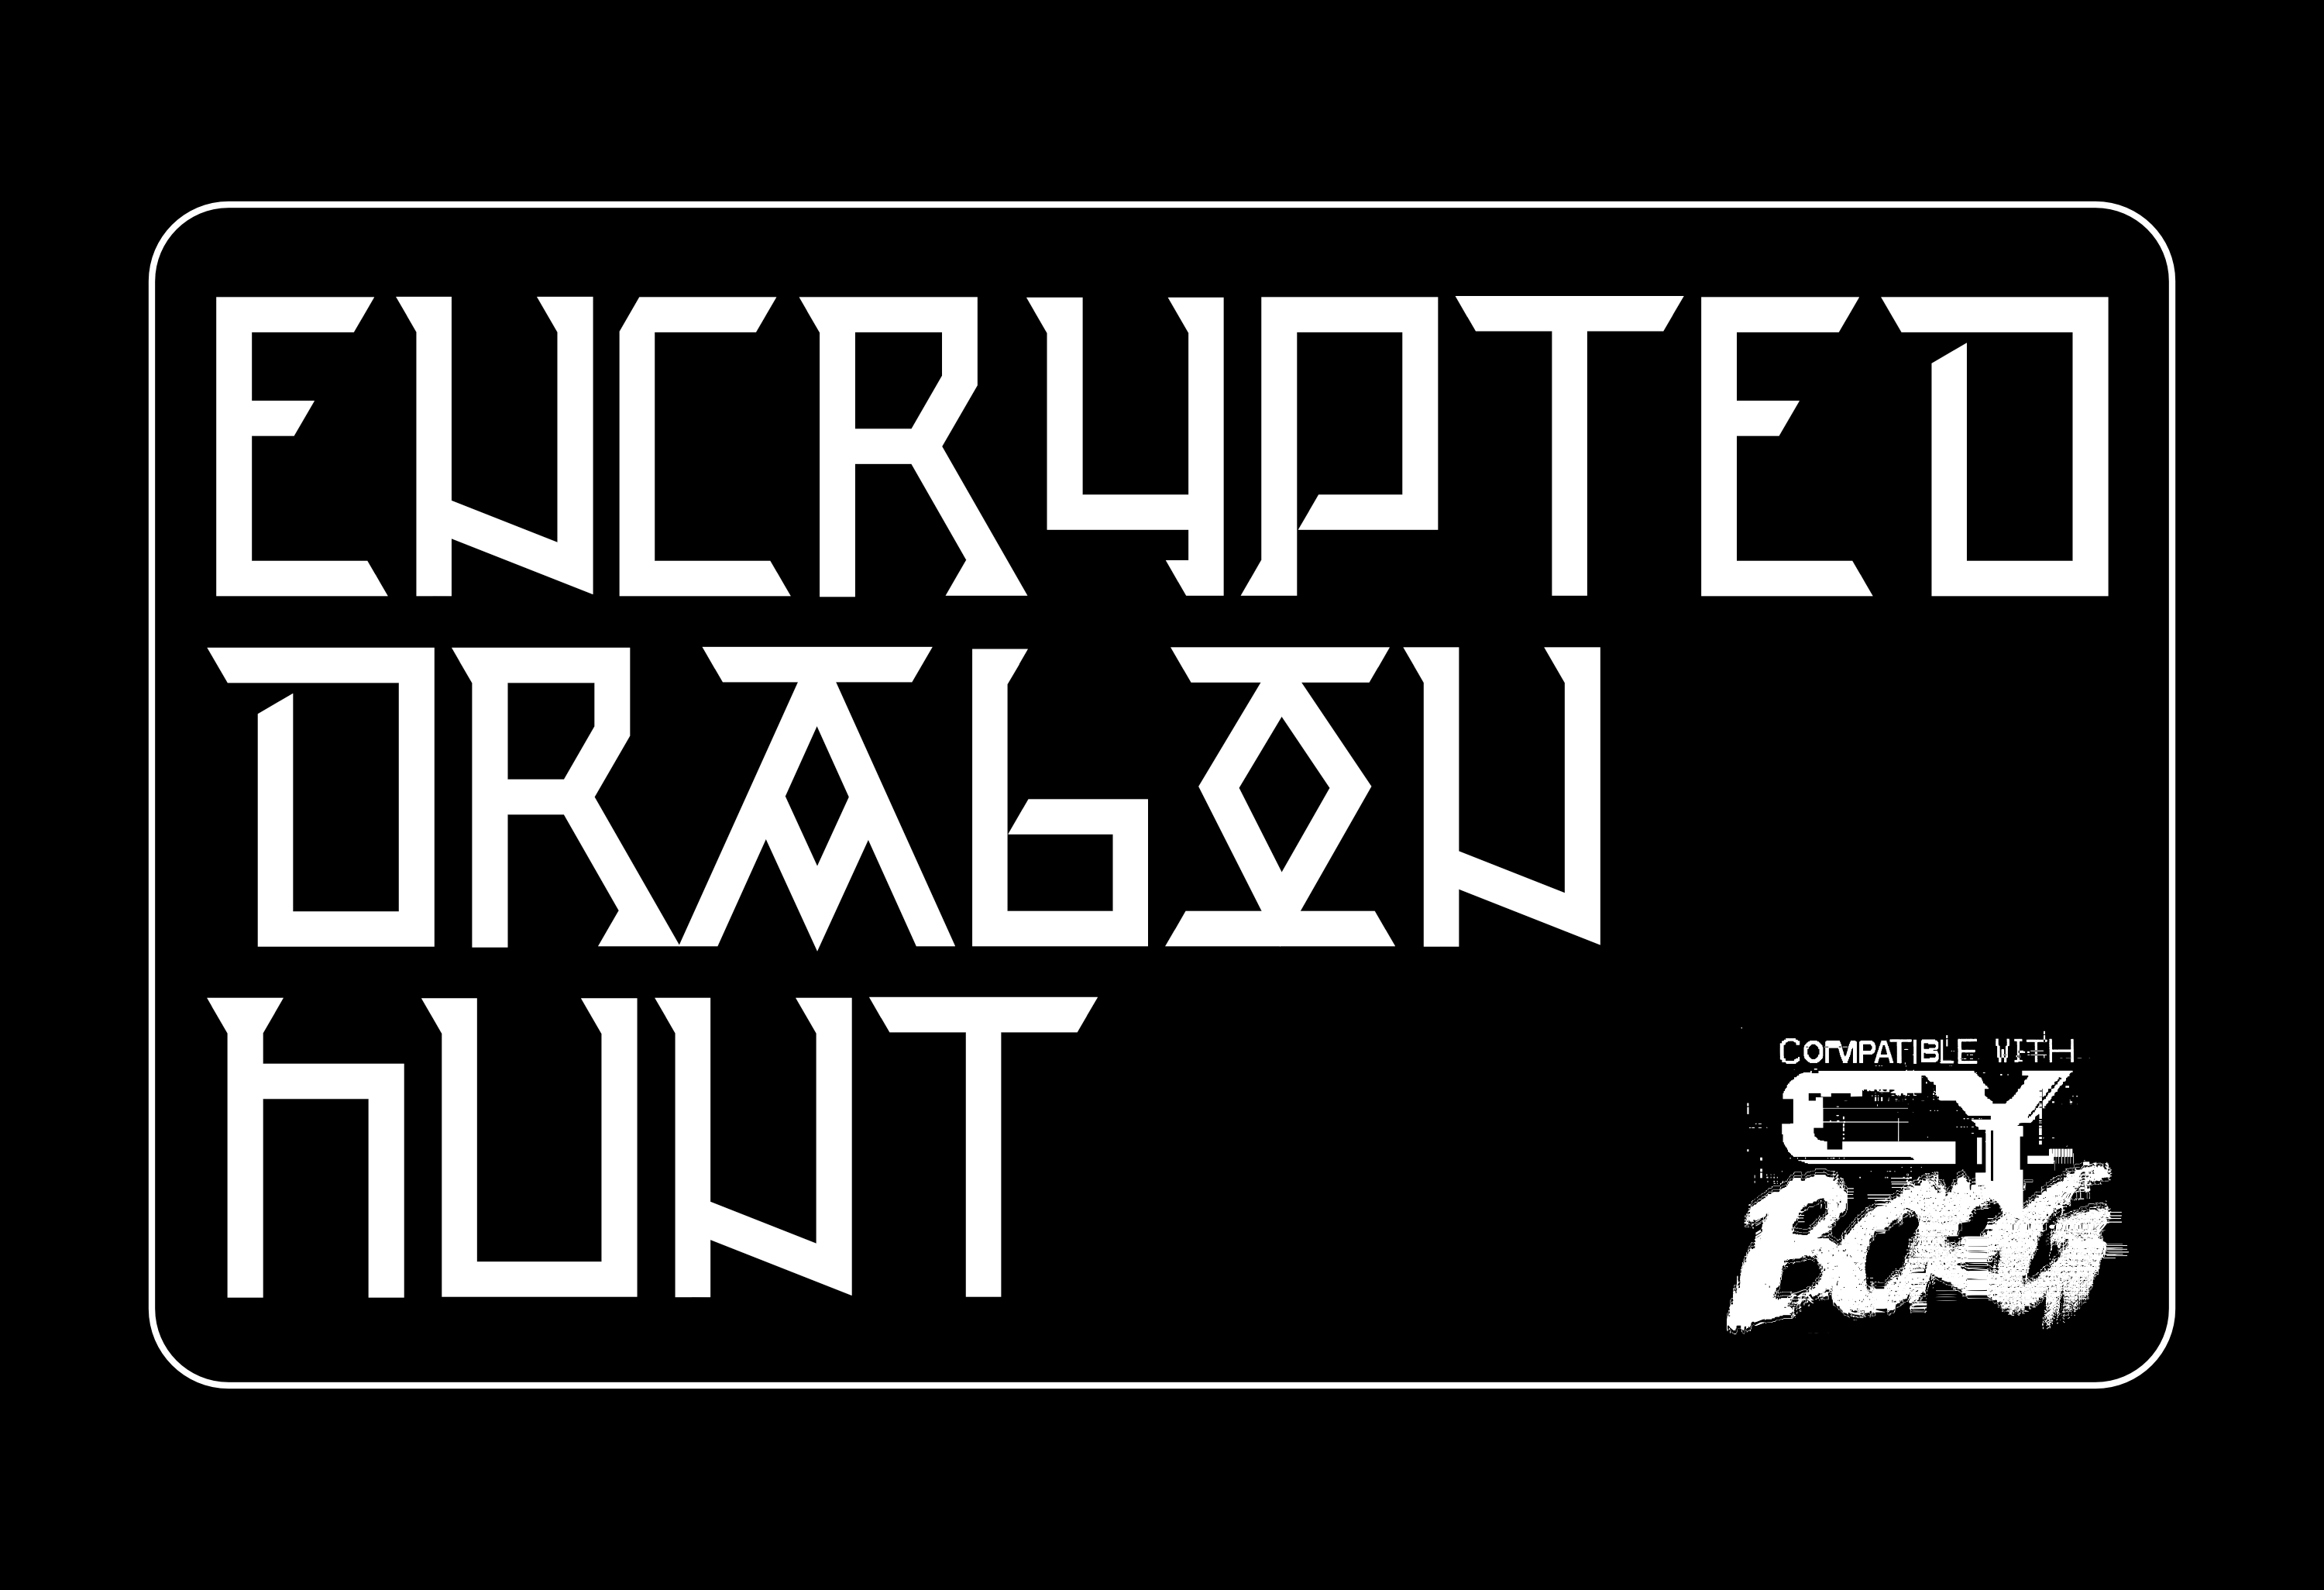 CY_BORG - Encrypted Dragon Hunt